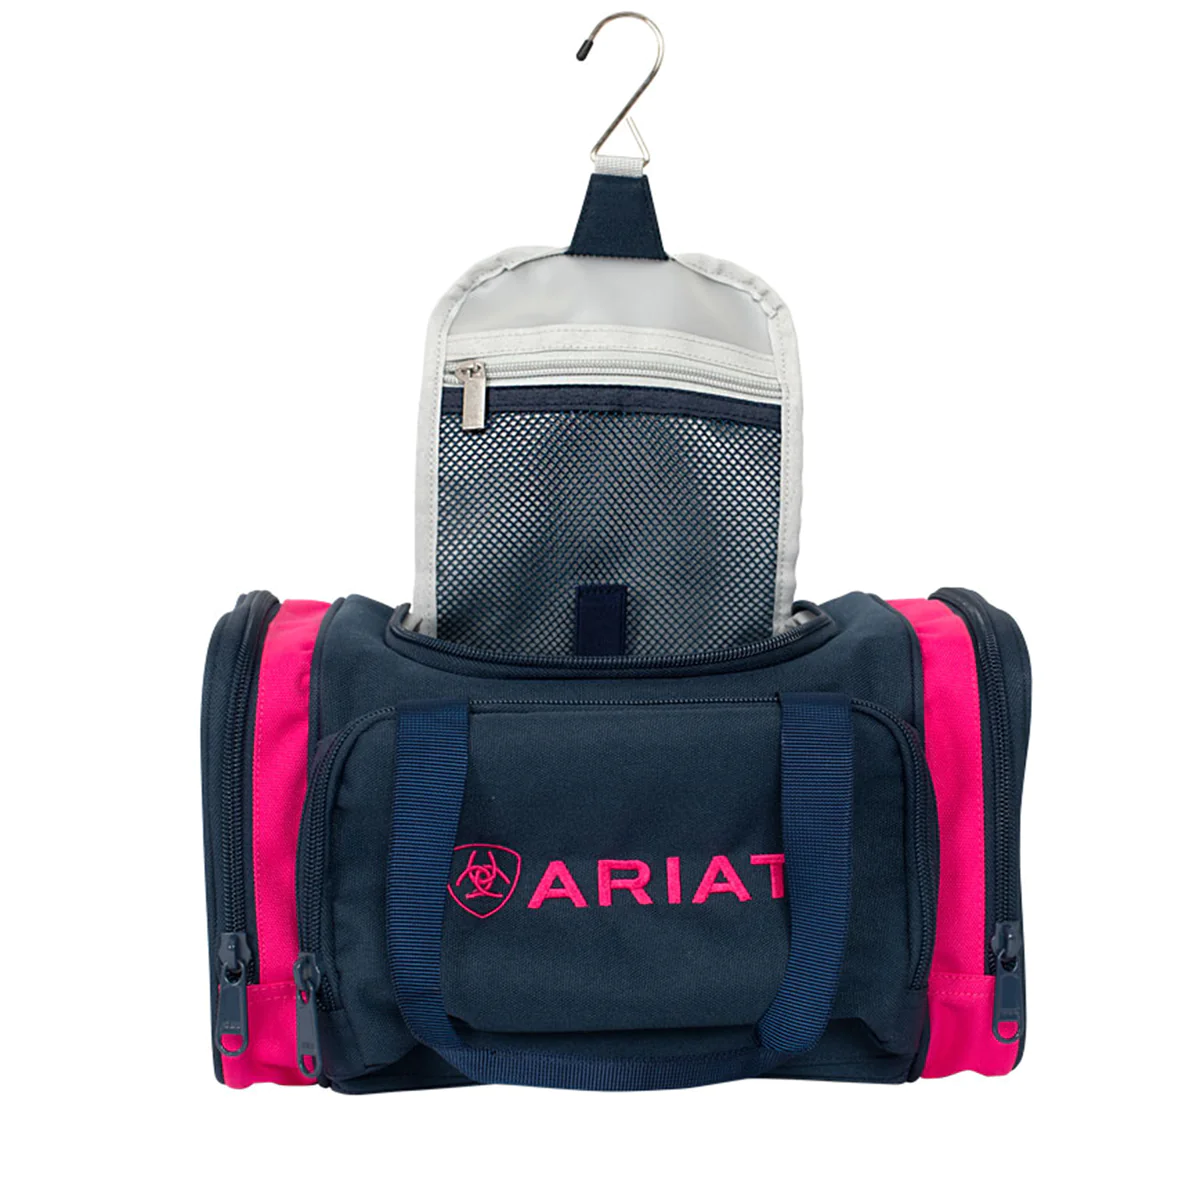 Ariat Vanity Bag-Pink